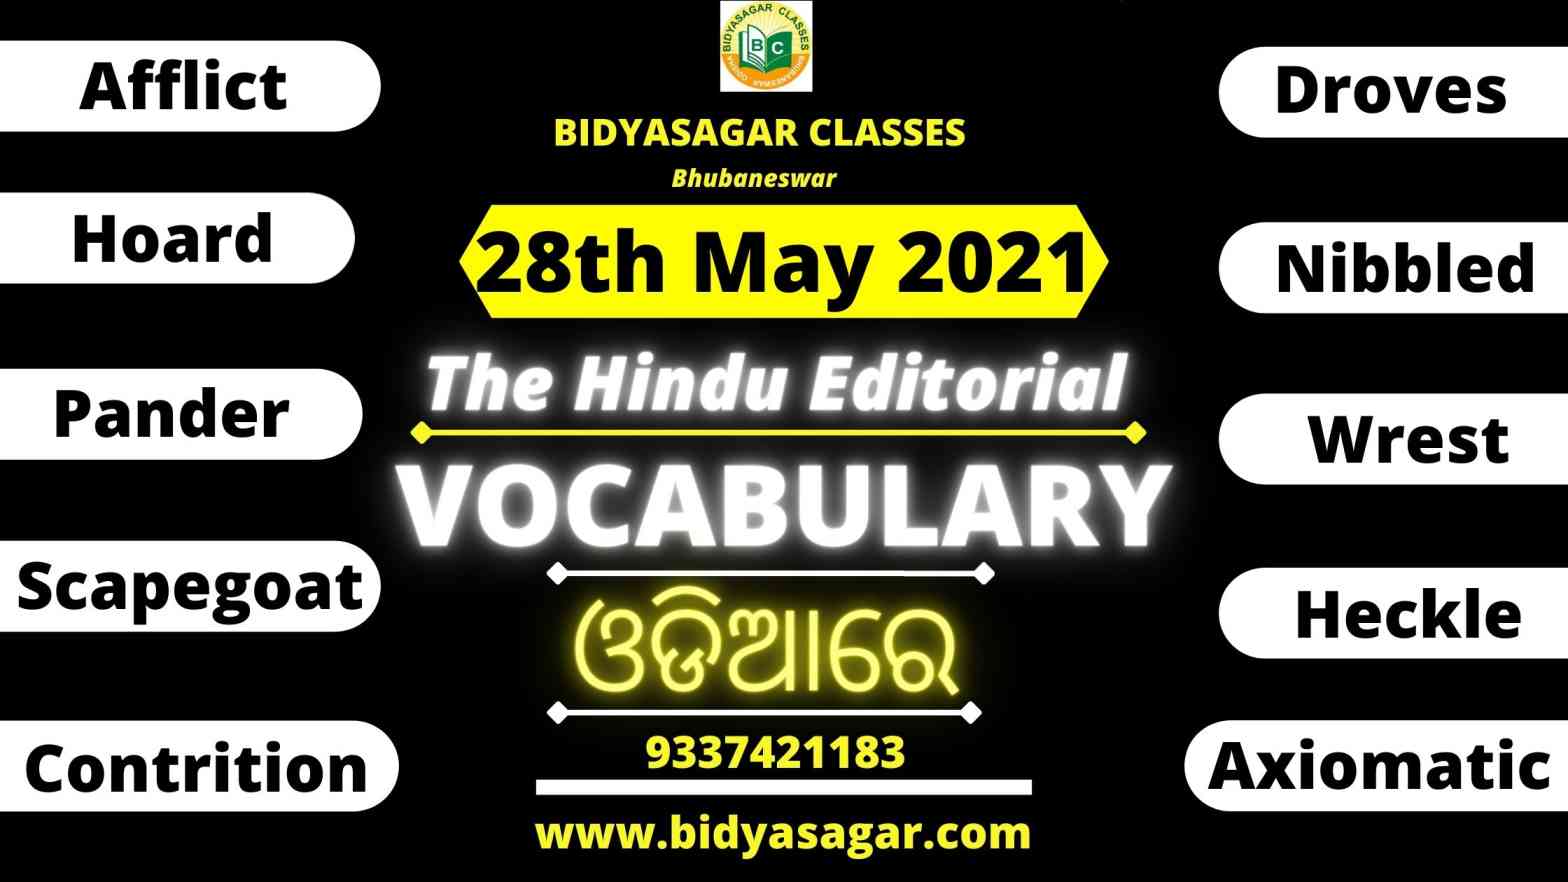 The Hindu Editorial Vocabulary of 28th May 2021